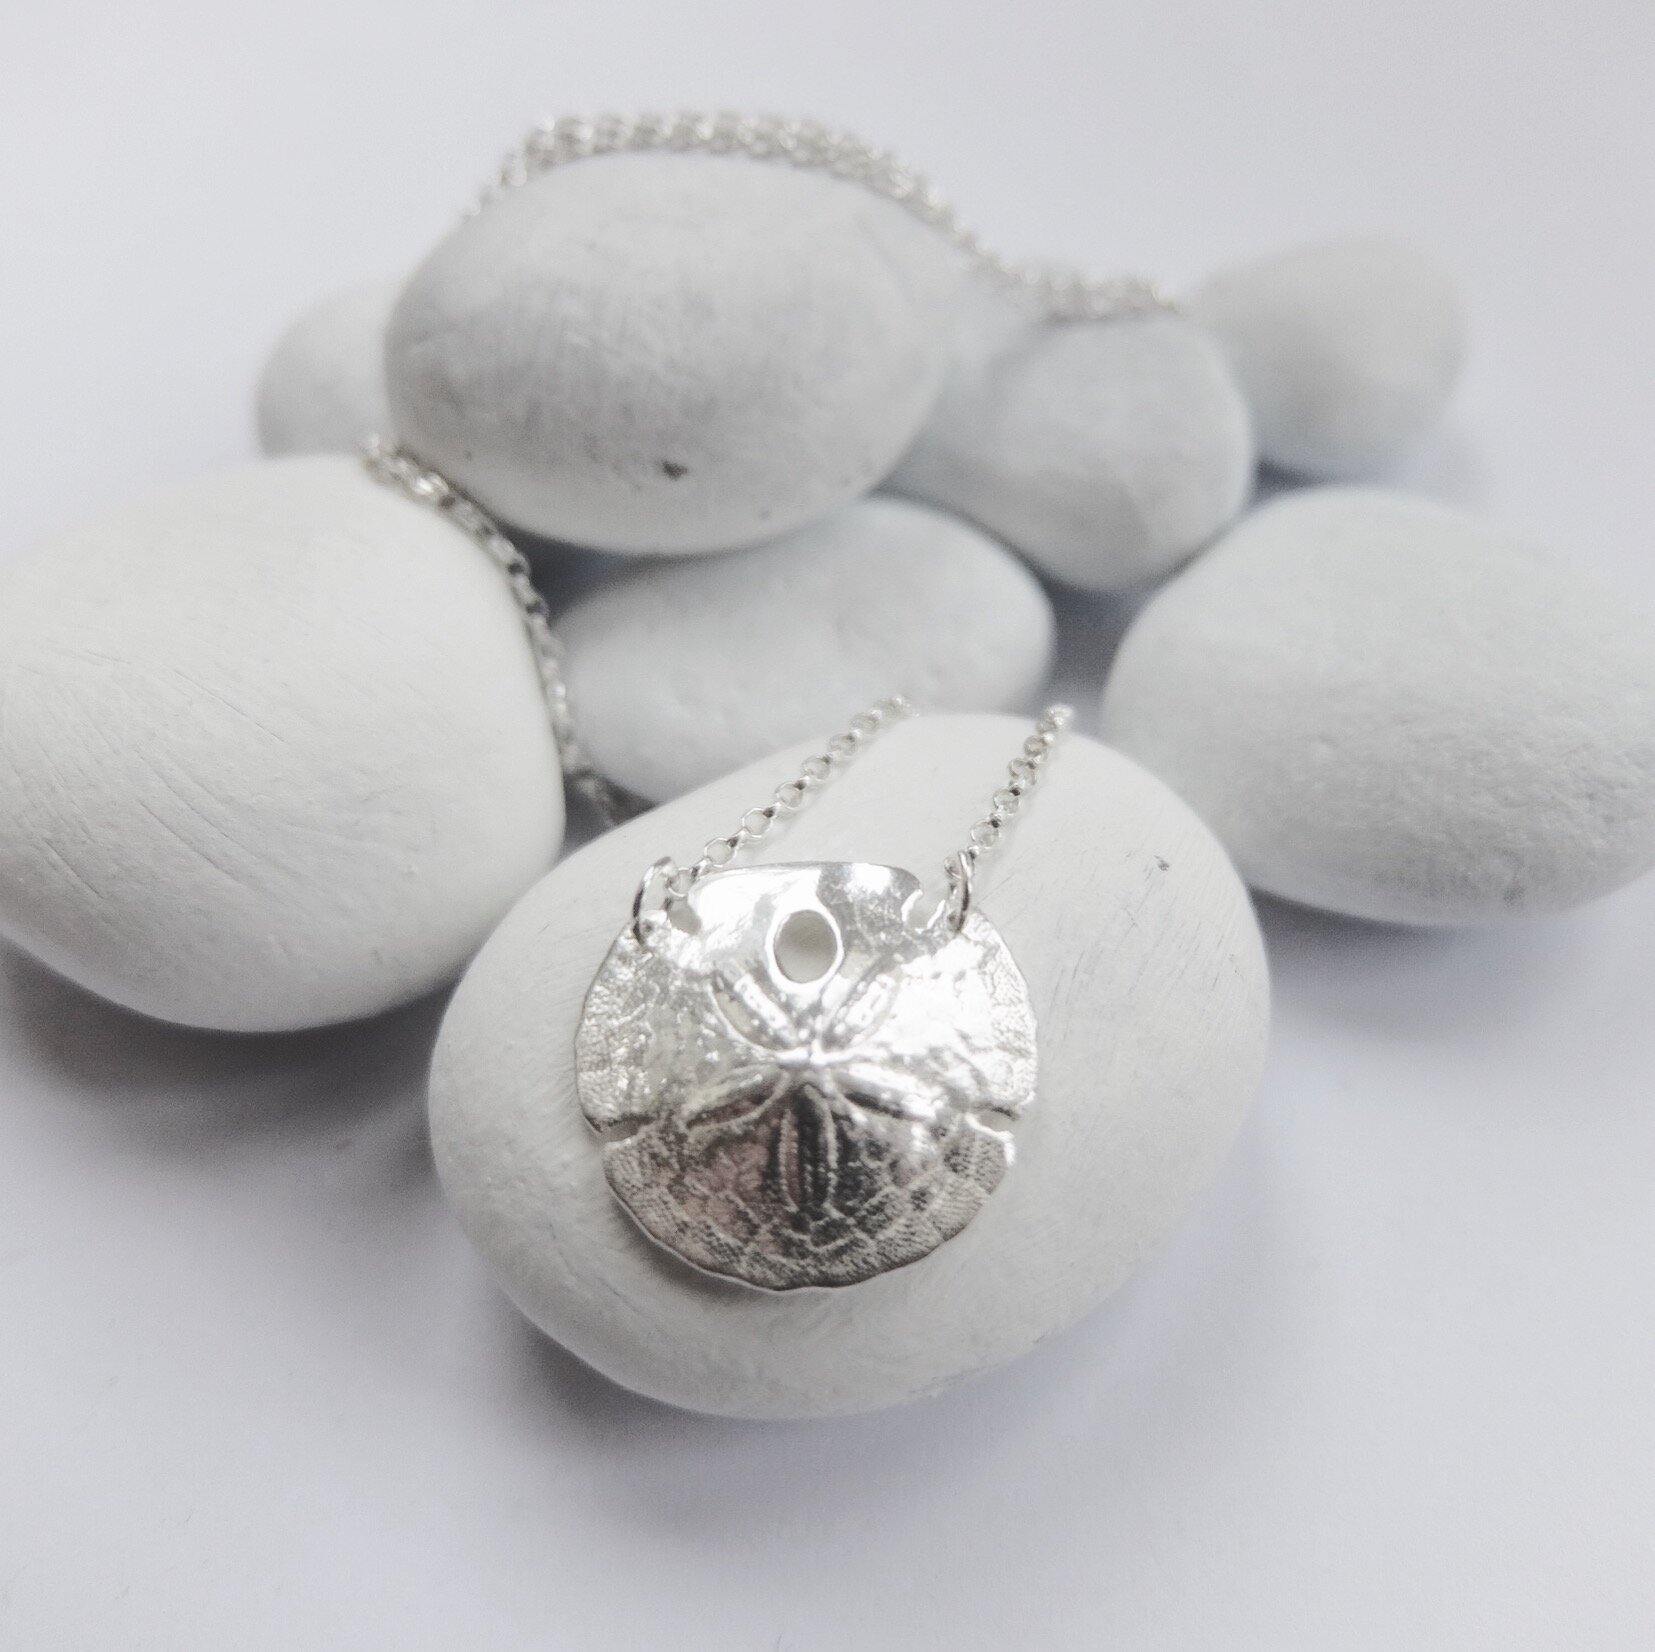 silver sand dollar necklace sterling silver pendant beach ocean sea inspired jewellery jewelry made in uk devon cornwall contemporary jeweller jasmine bowden shell surf bespoke 6.jpg